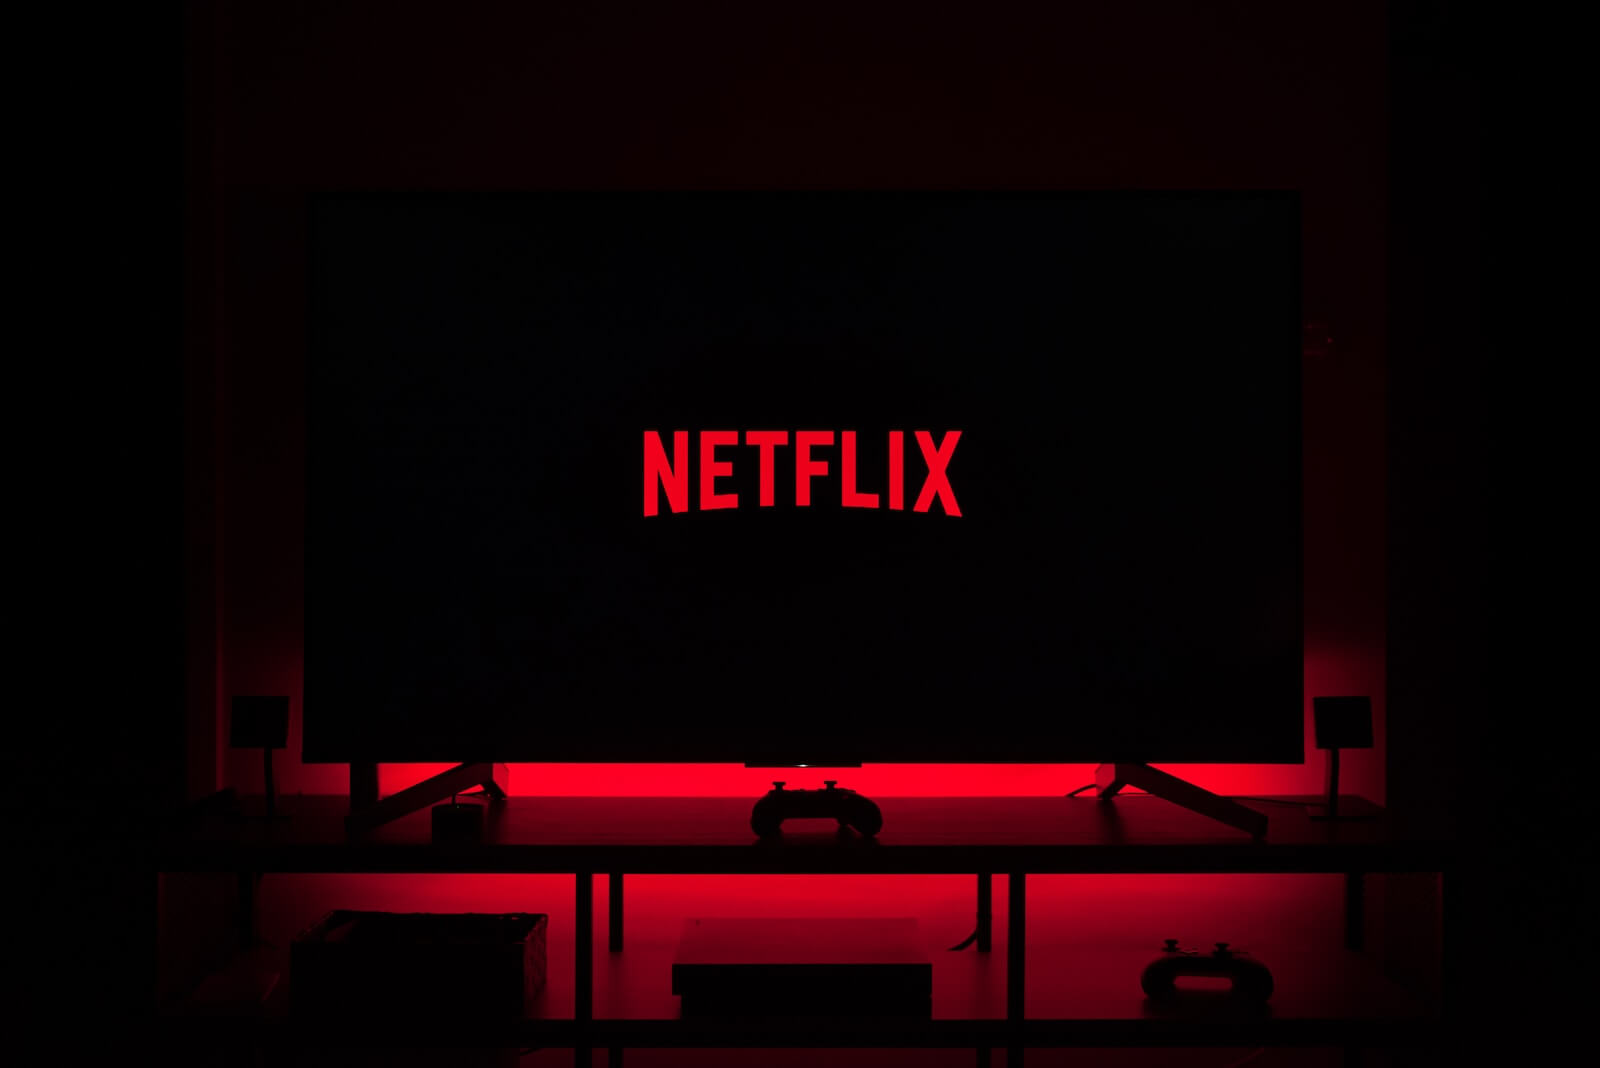 Netflix starting up on a TV